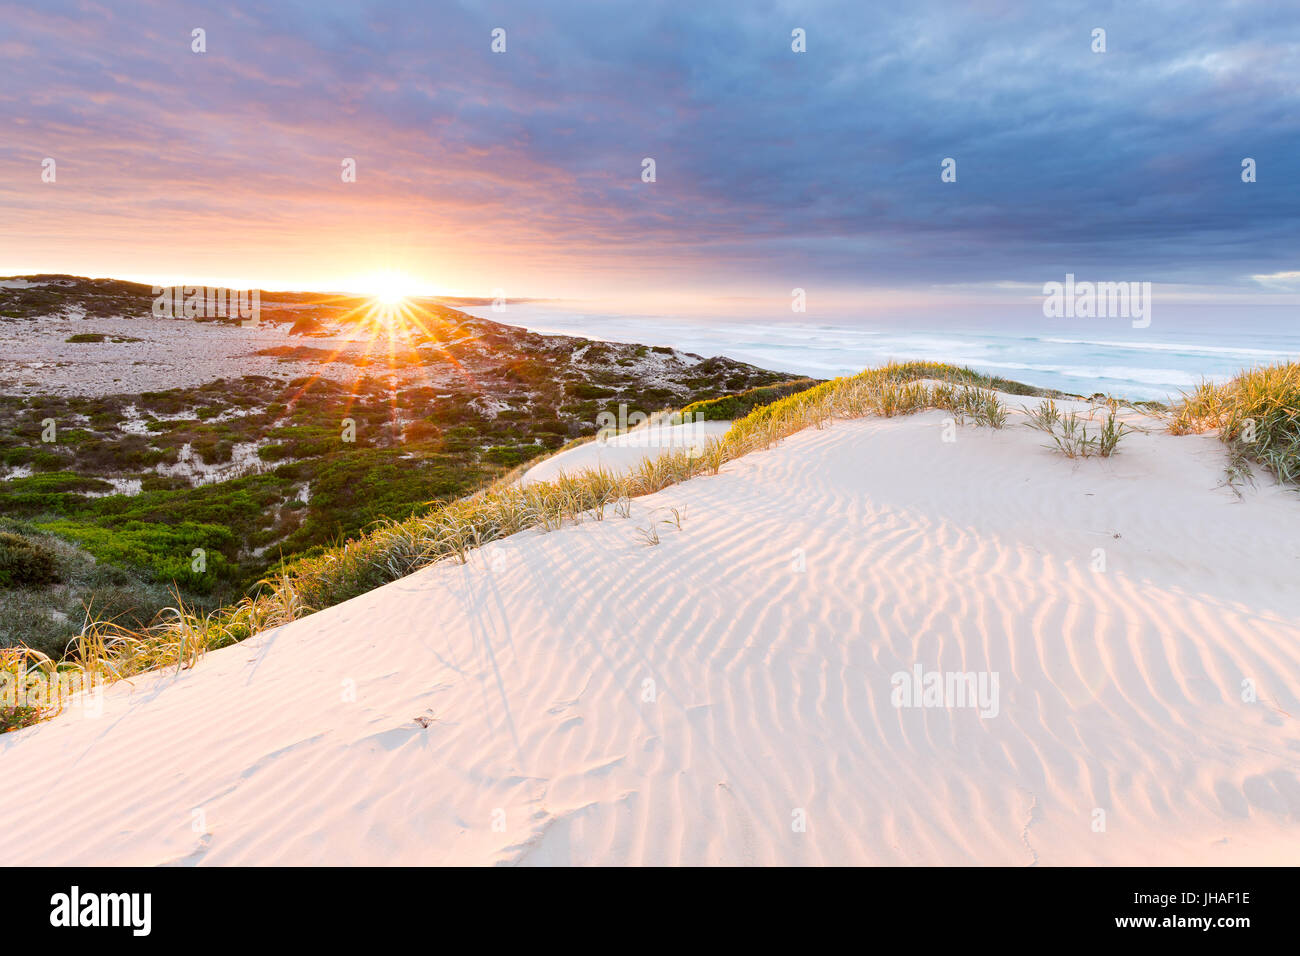 The sun bursts above the horizon, illuminated the sand dunes and surrounding coastline in this beautiful seascape. Stock Photo